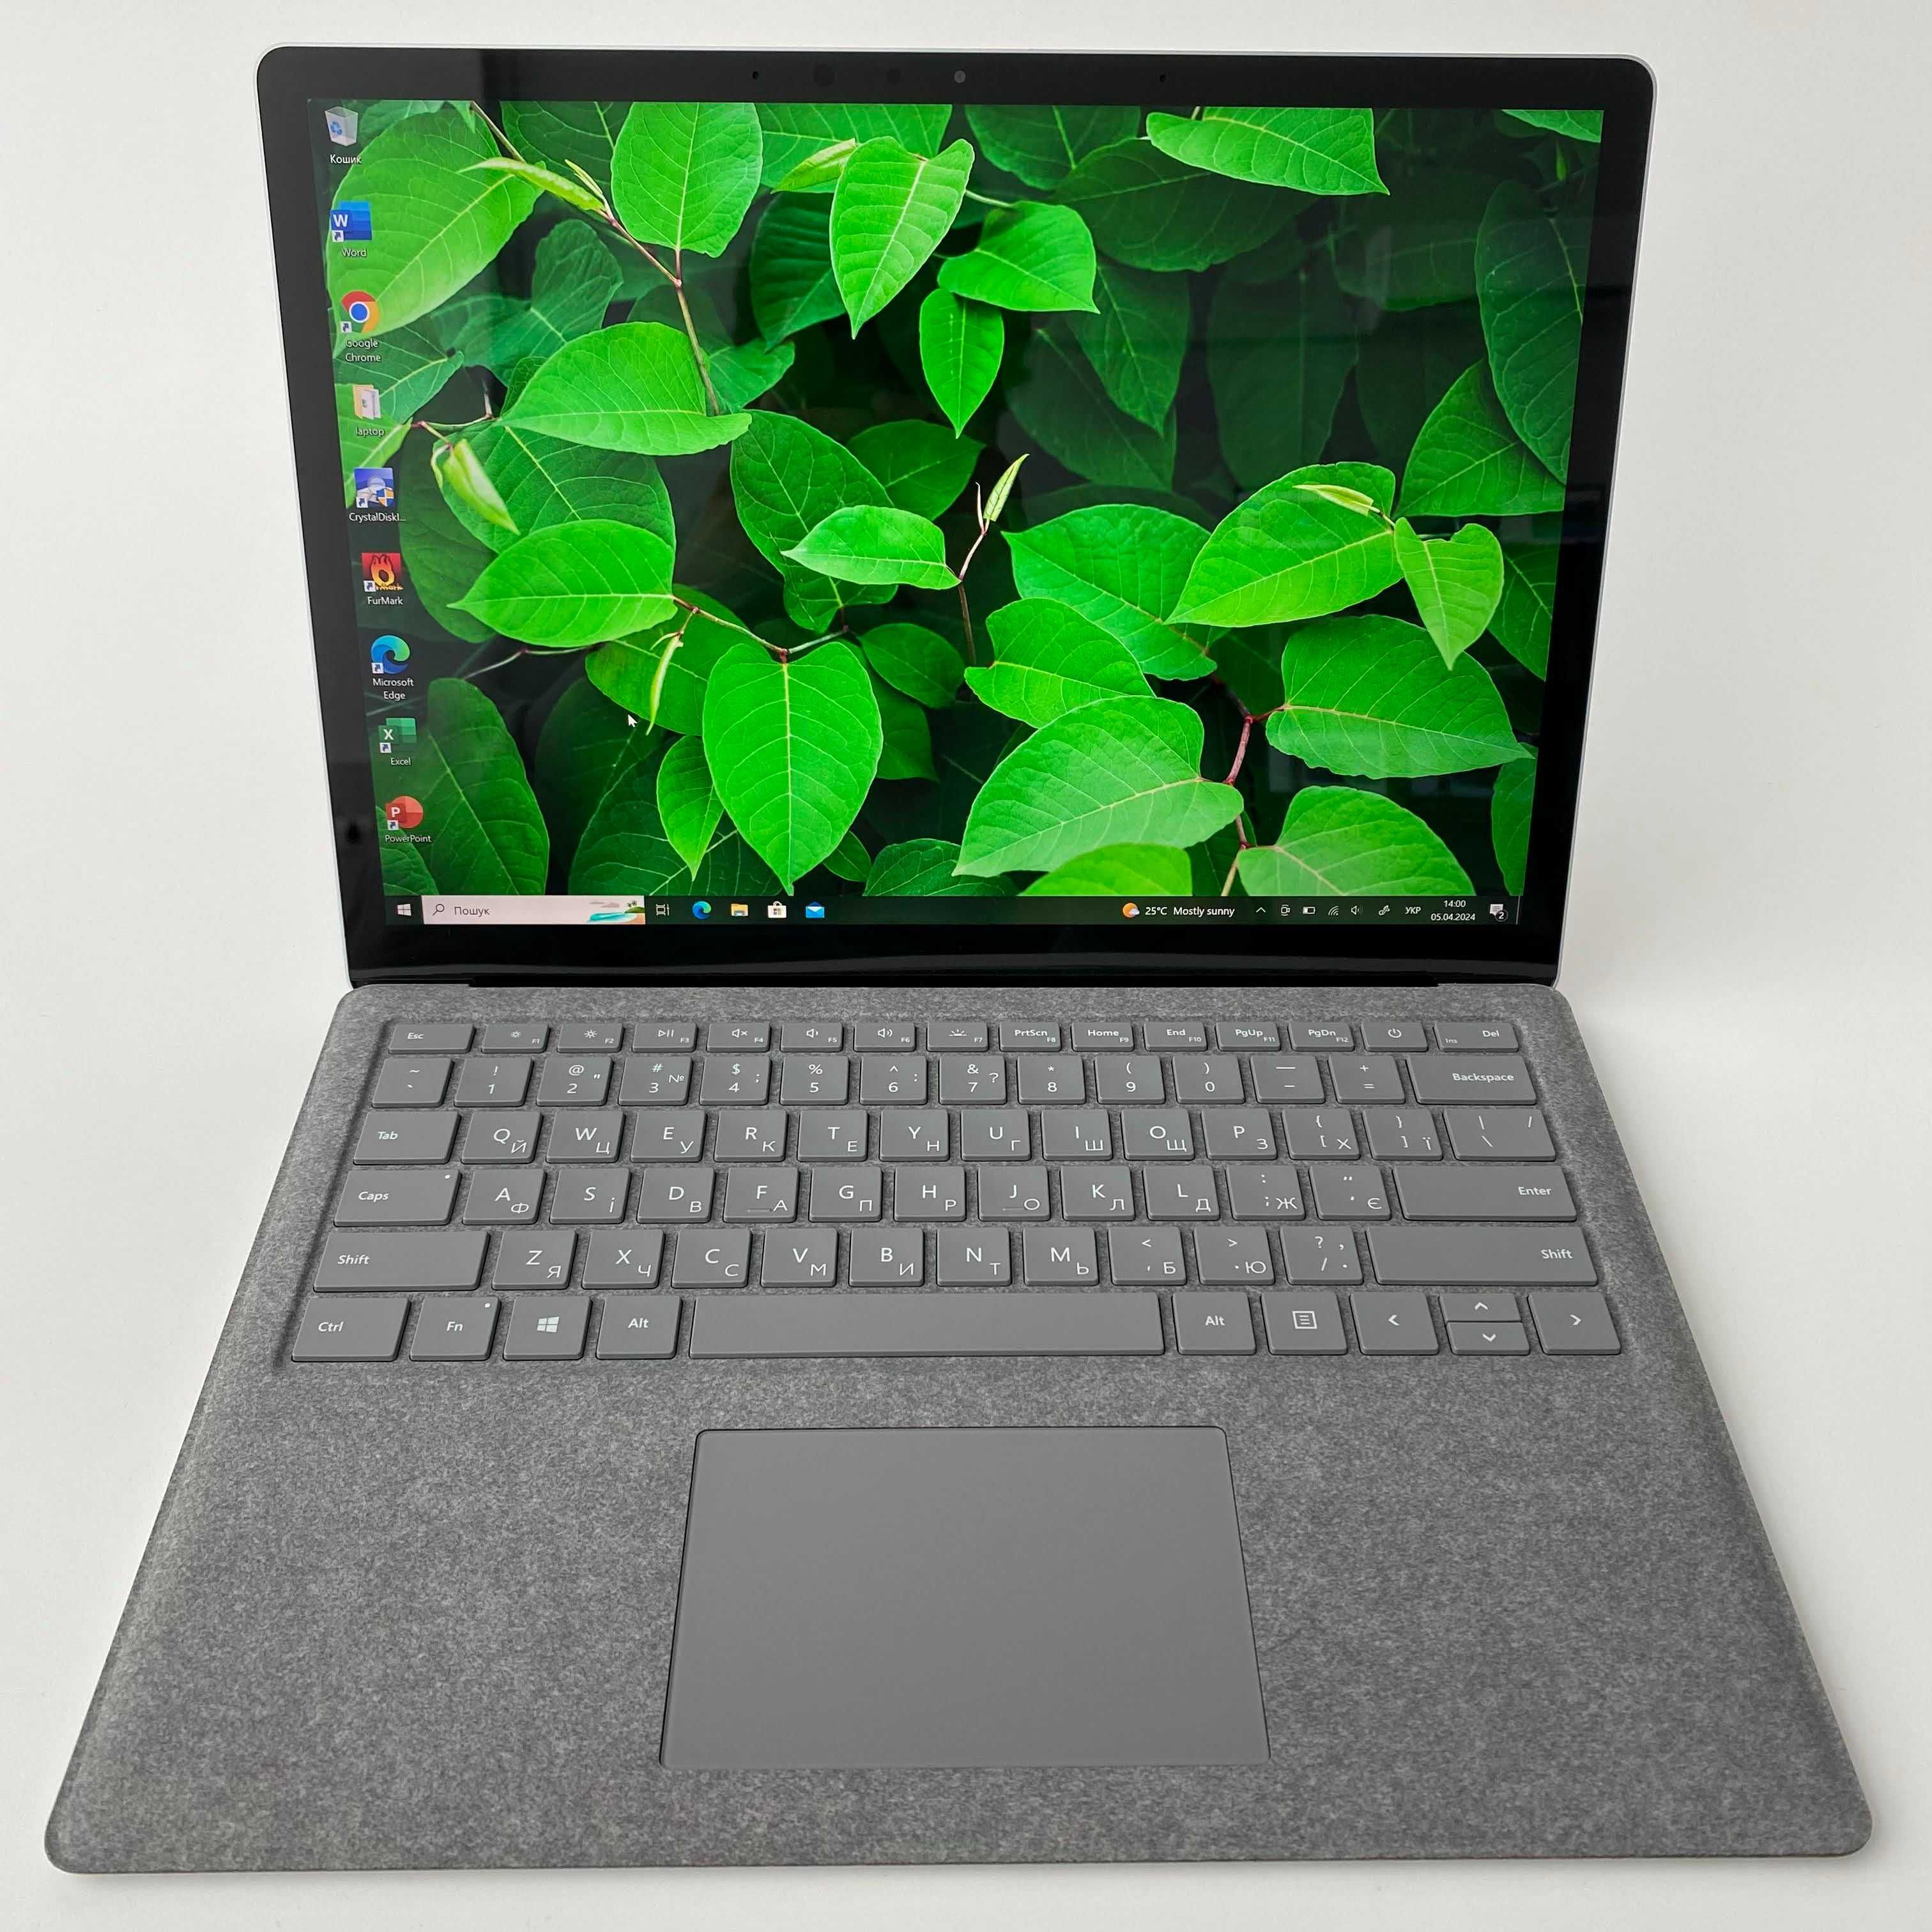 Ноутбук Microsoft Surface Laptop QHD i5-7300U/8GB RAM/128GB SSD